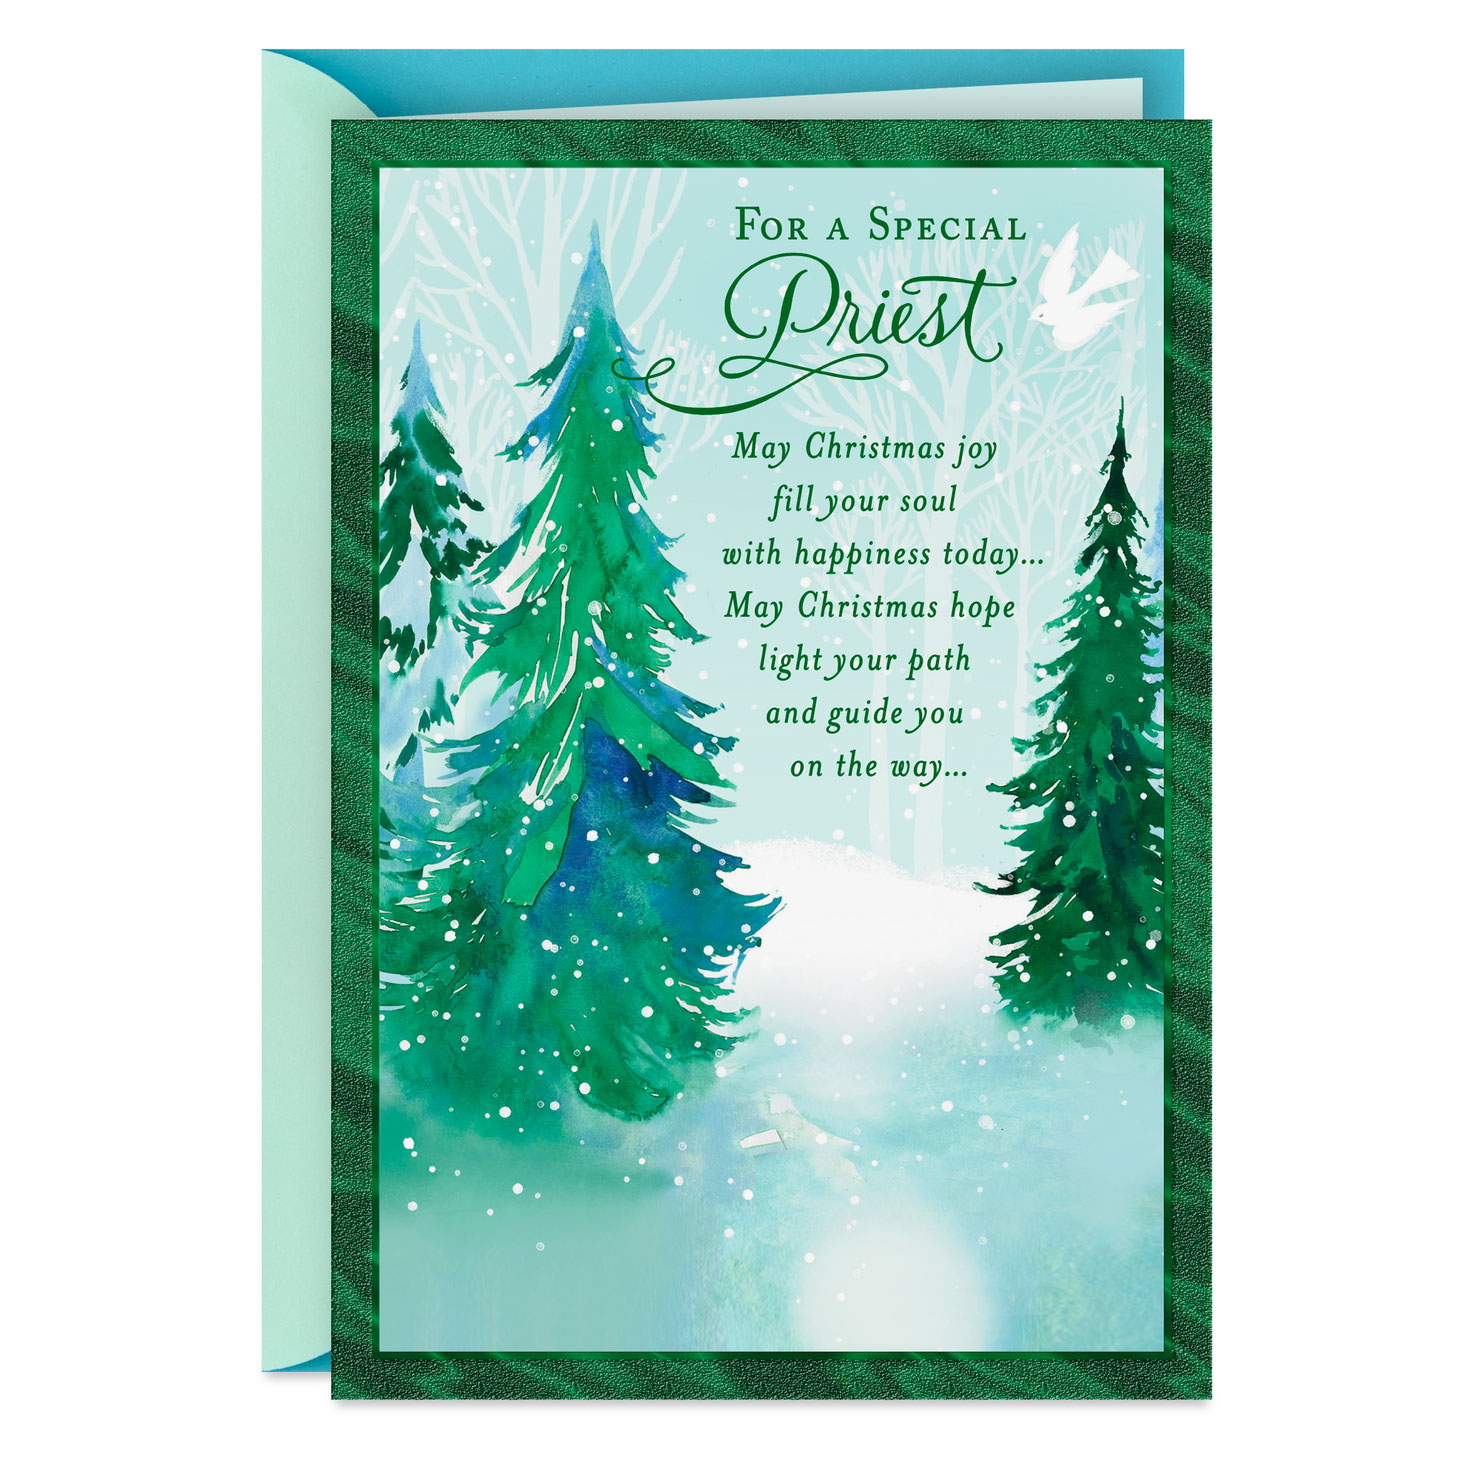 Winter Greeting Card